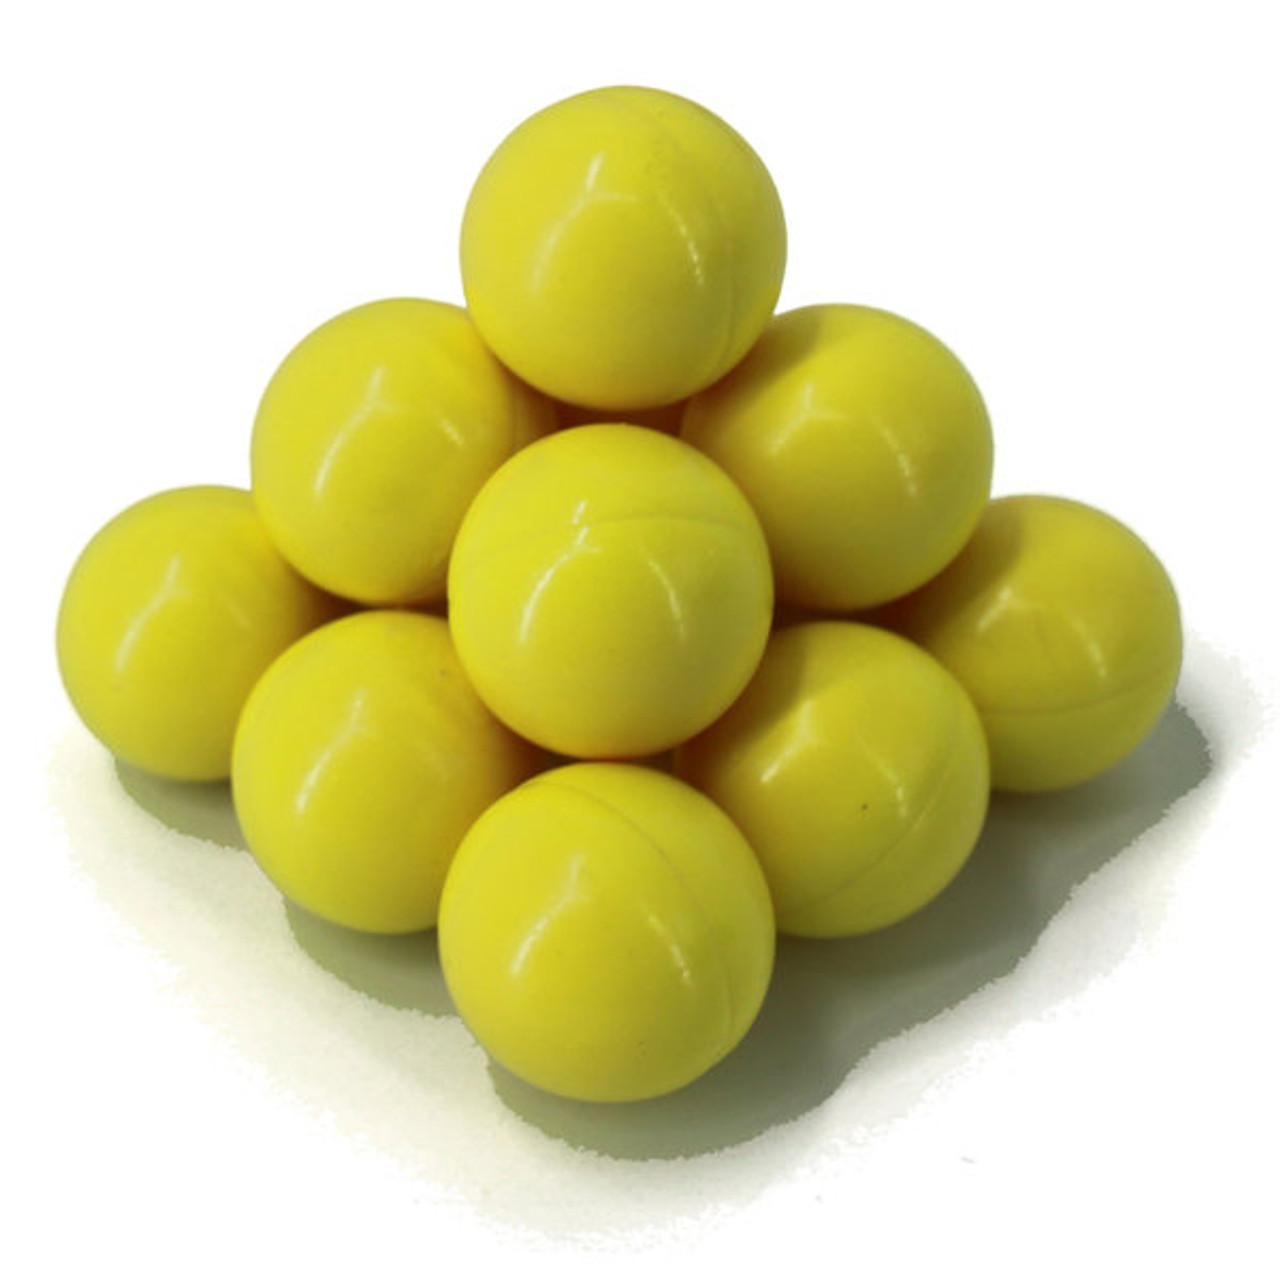 0.68 Wholesale Paintballs, Paint Balls, Paintball Balls Equivalent